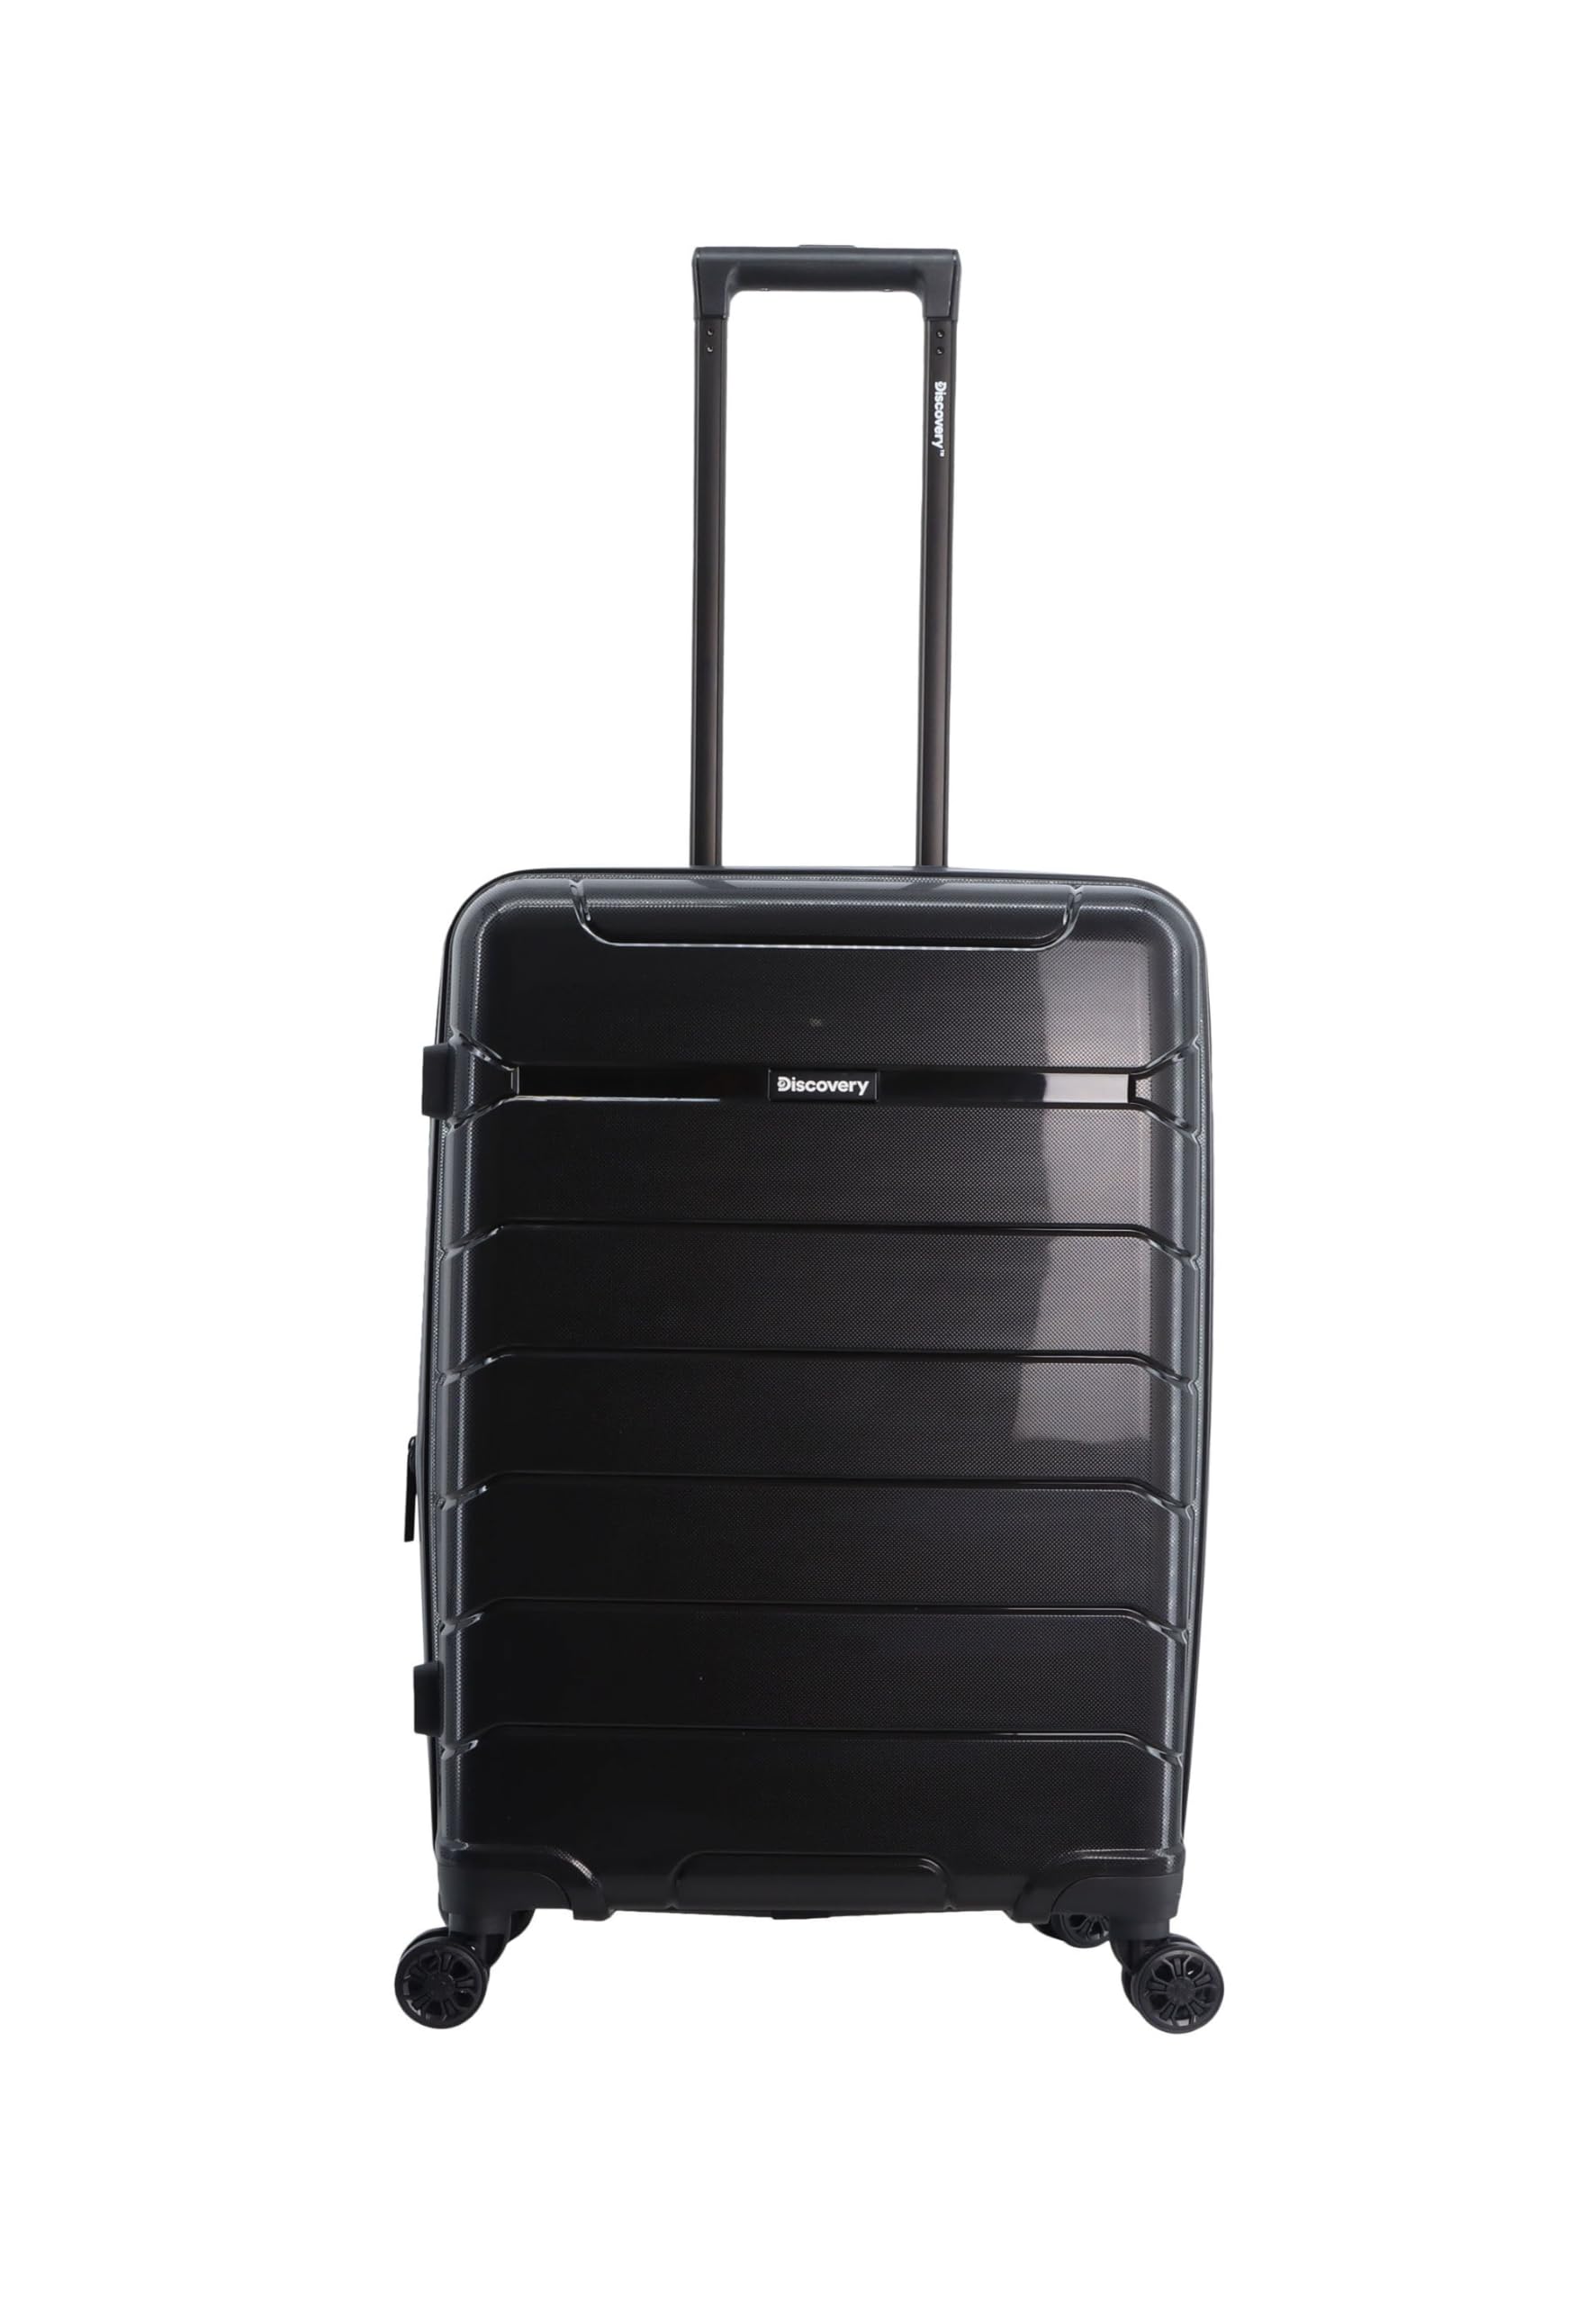 Discovery Unisex Luggage Skyward